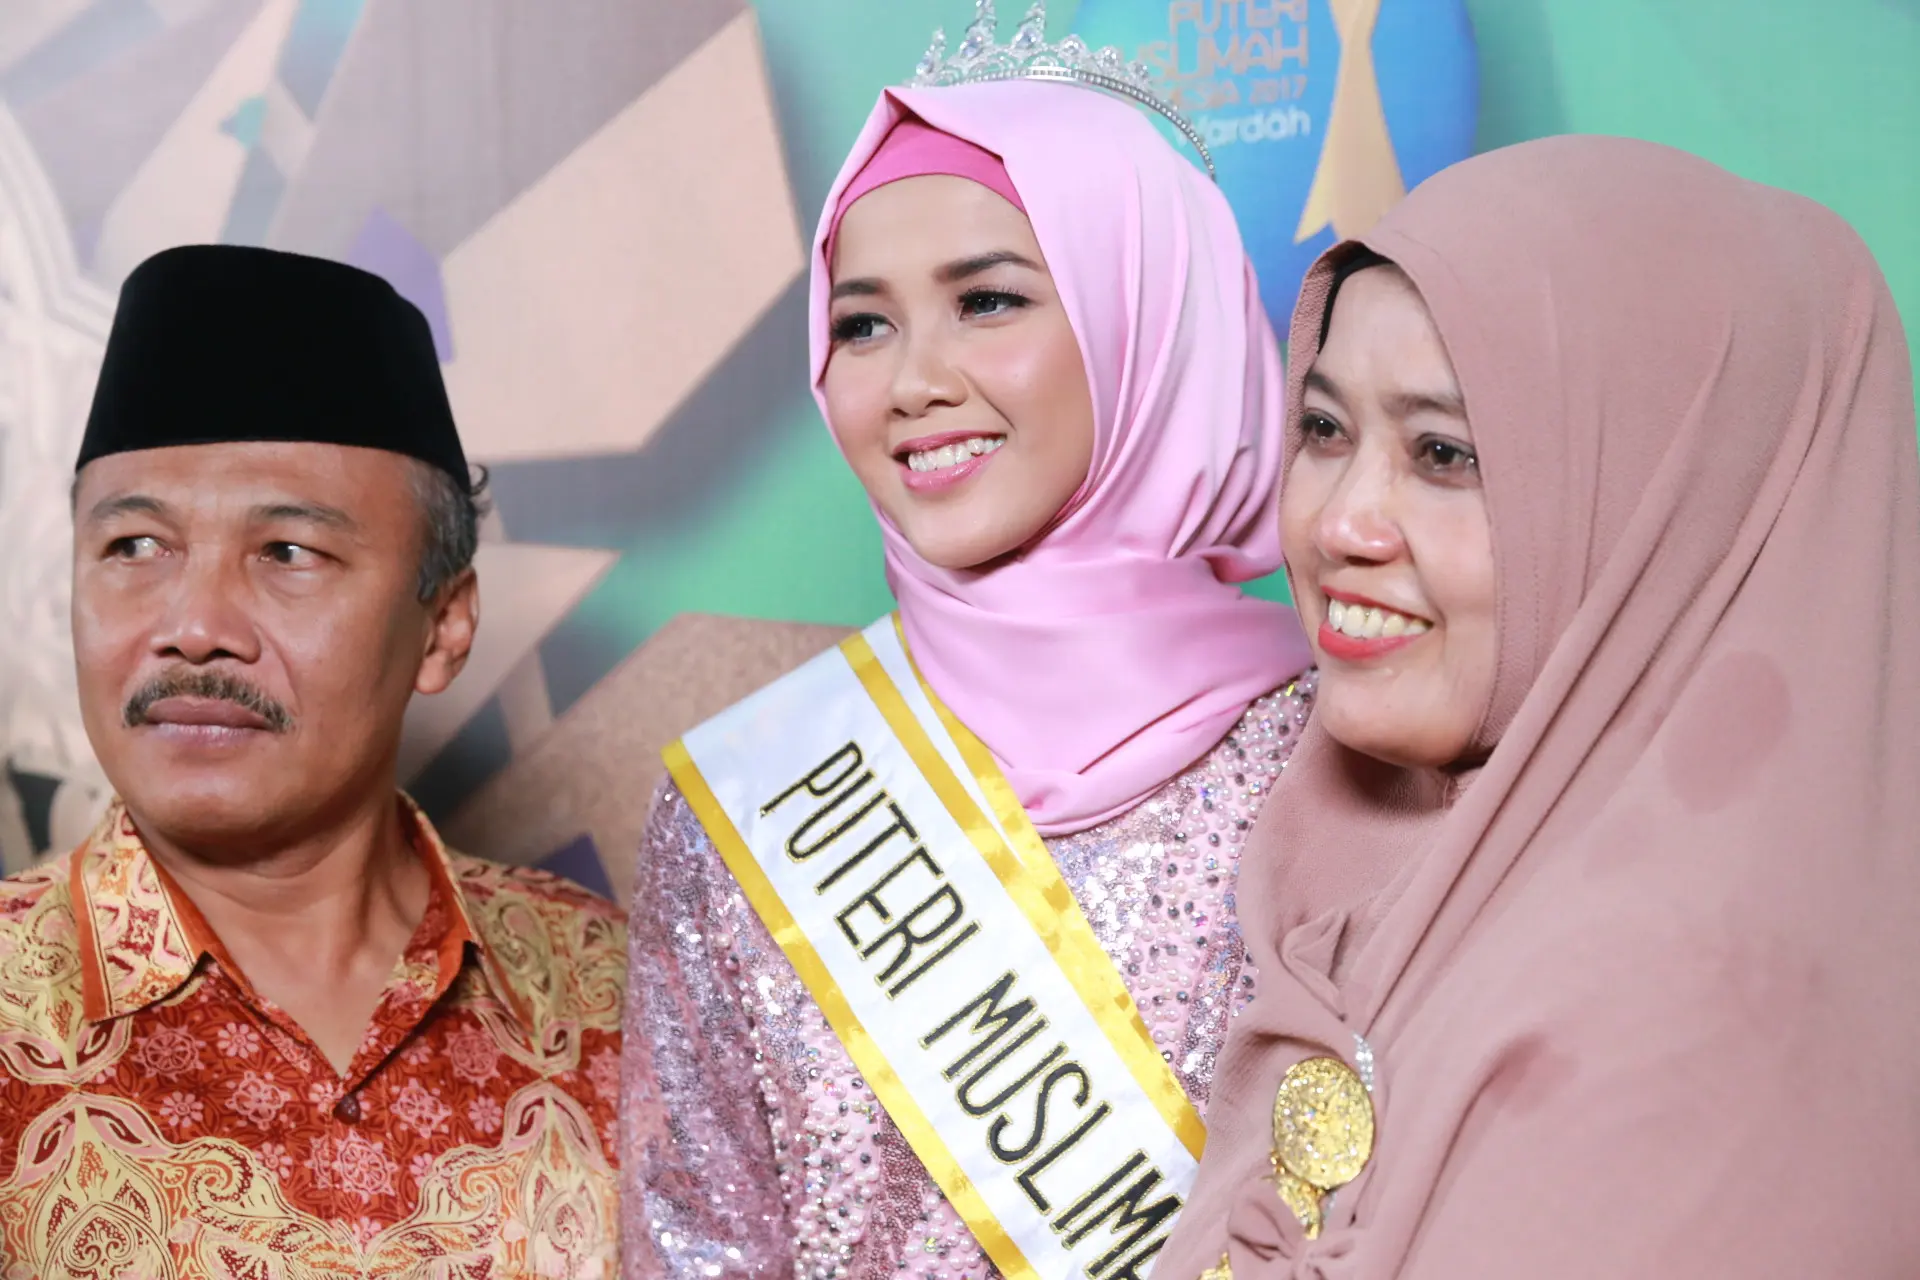 Syifa Fatimah, Puteri Muslimah Indonesia 2017 bersama kedua orangtuanya. (Adrian Putra/Bintang.com)